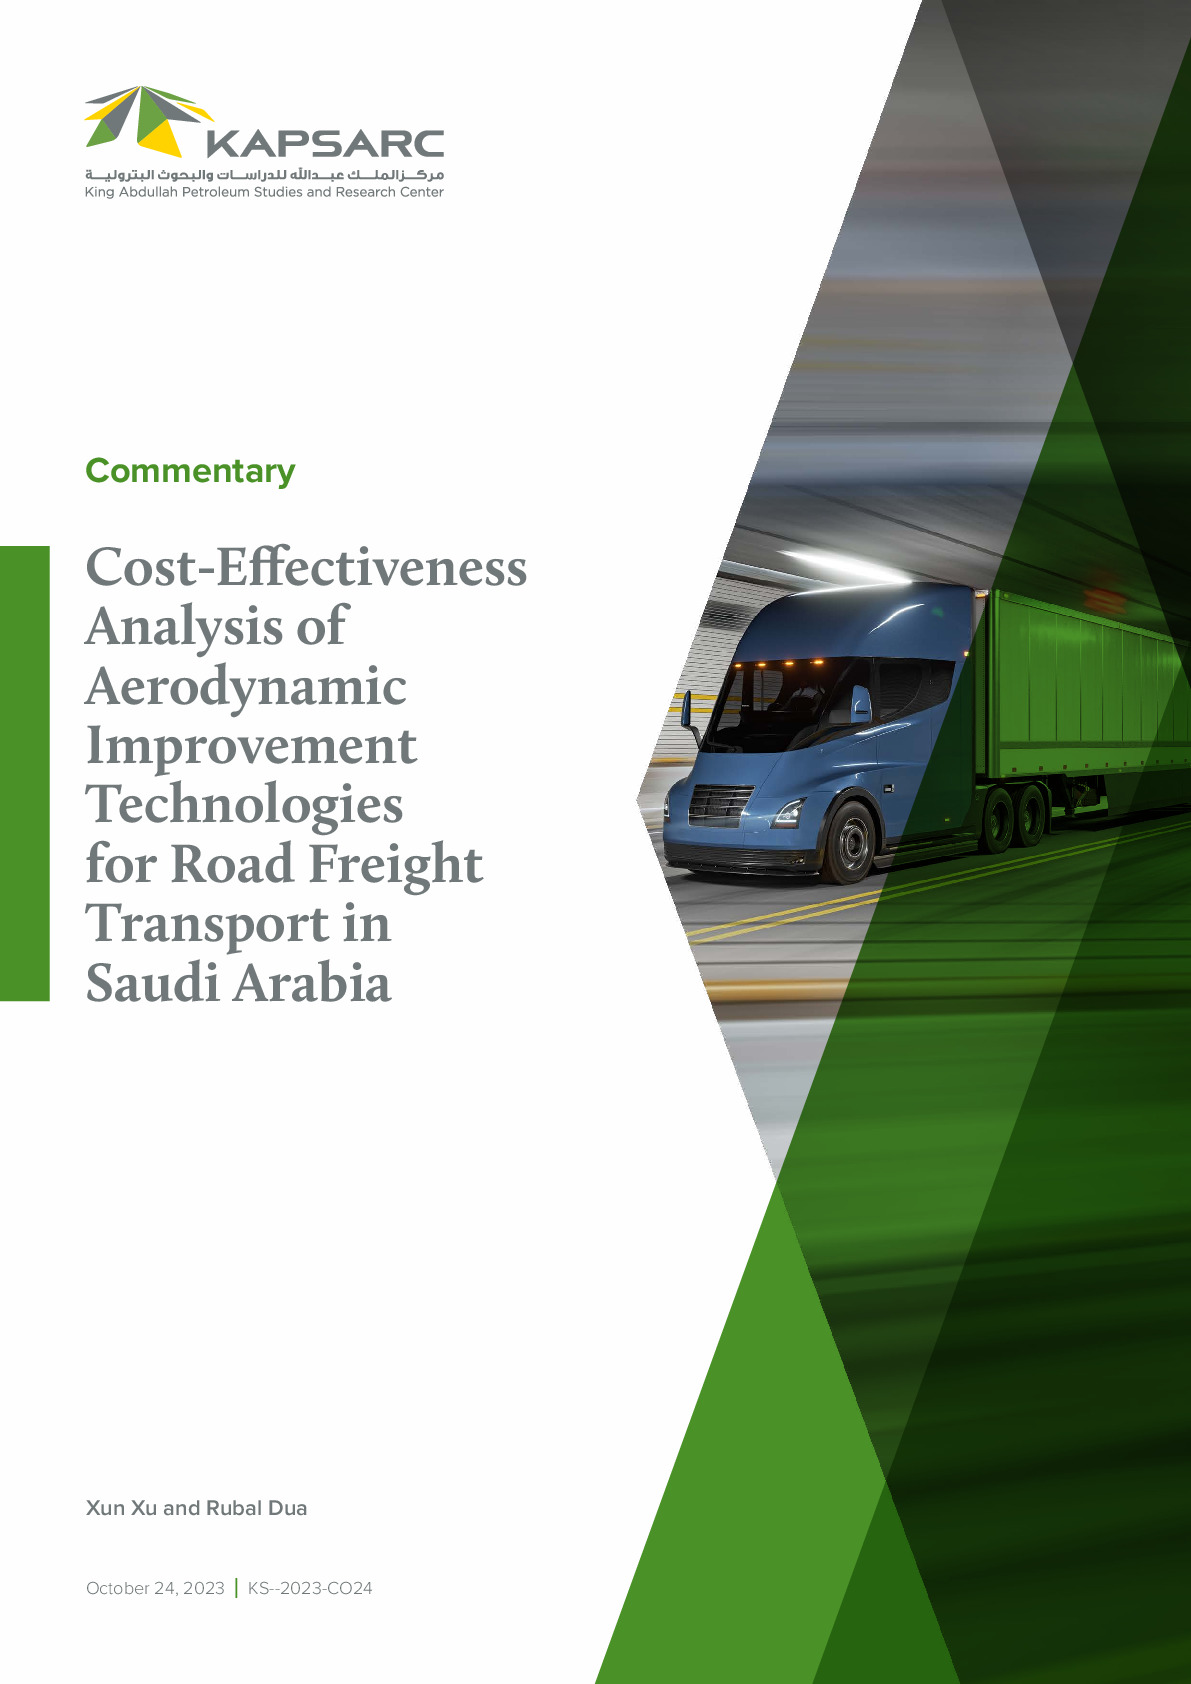 Cost-Effectiveness Analysis of Aerodynamic Improvement Technologies for Road Freight Transport in Saudi Arabia